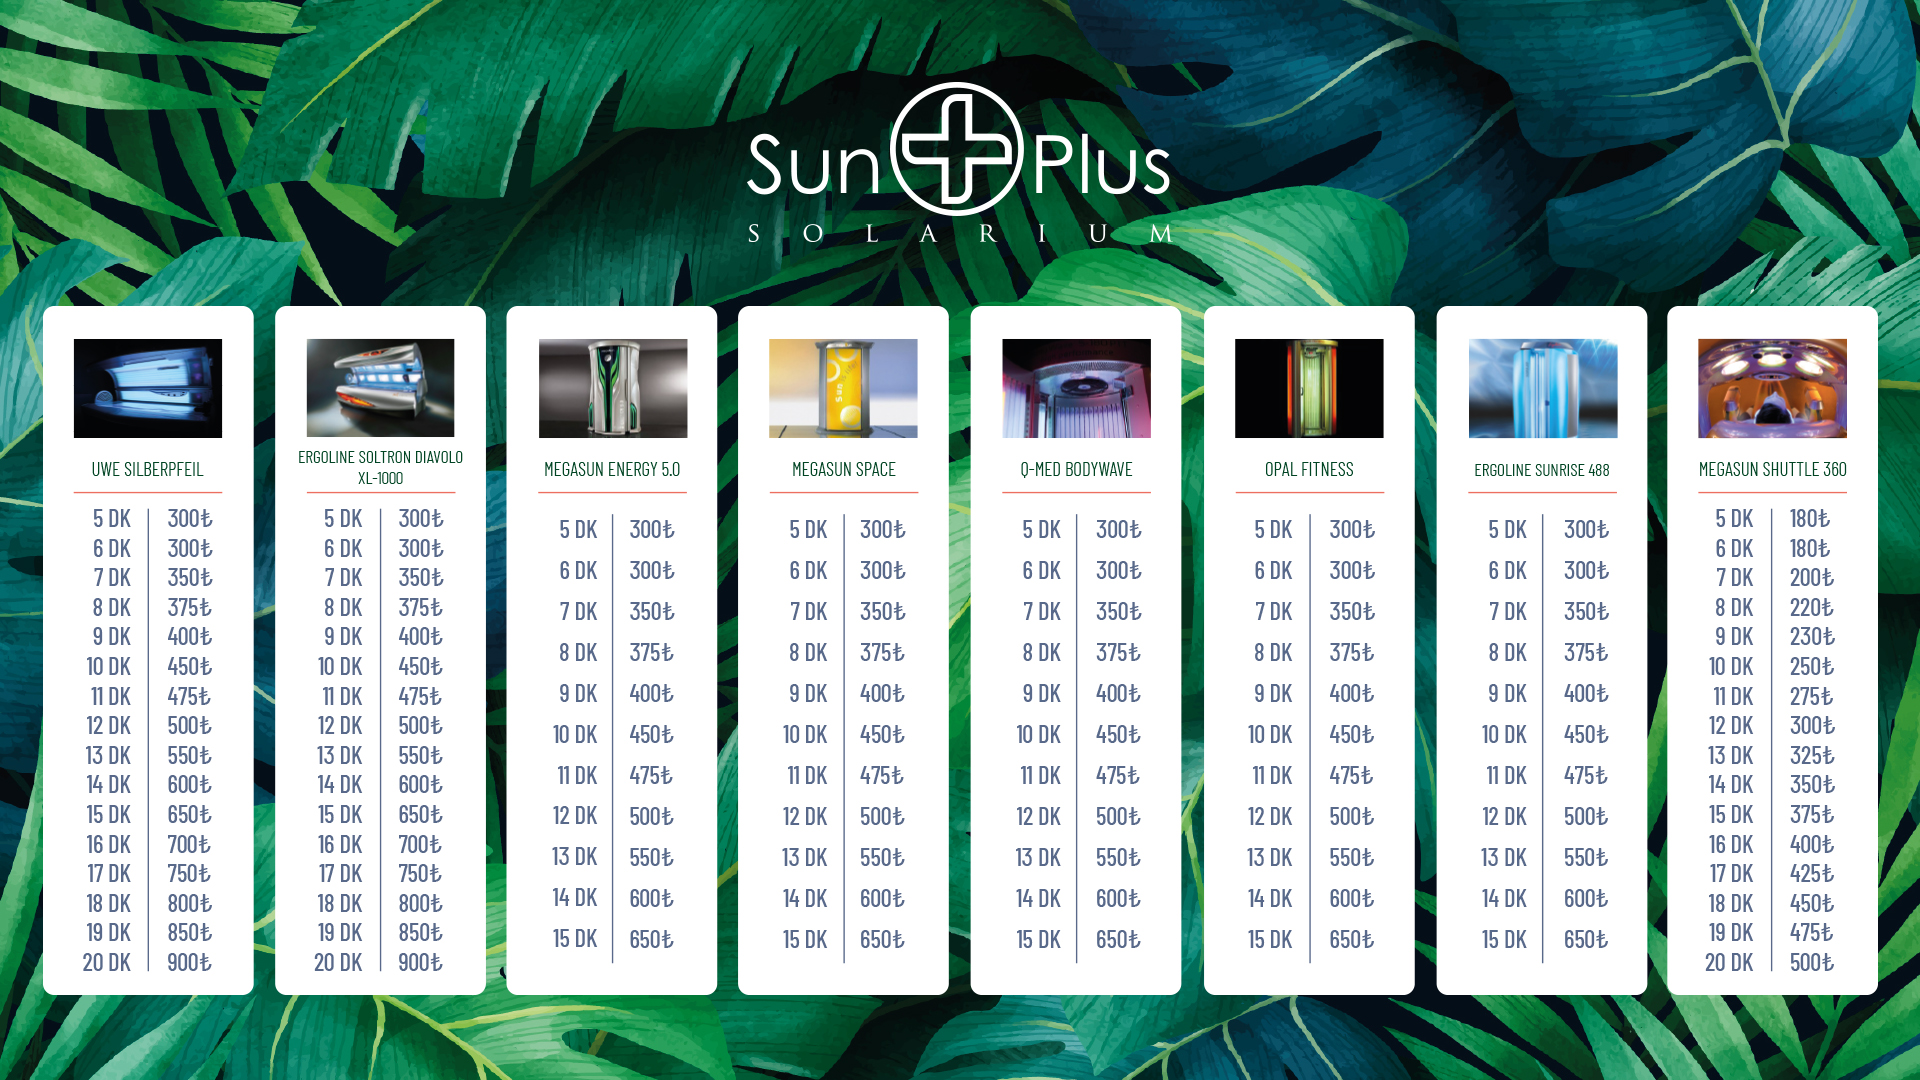 Solarium Sunplus Fiyat Tablosu